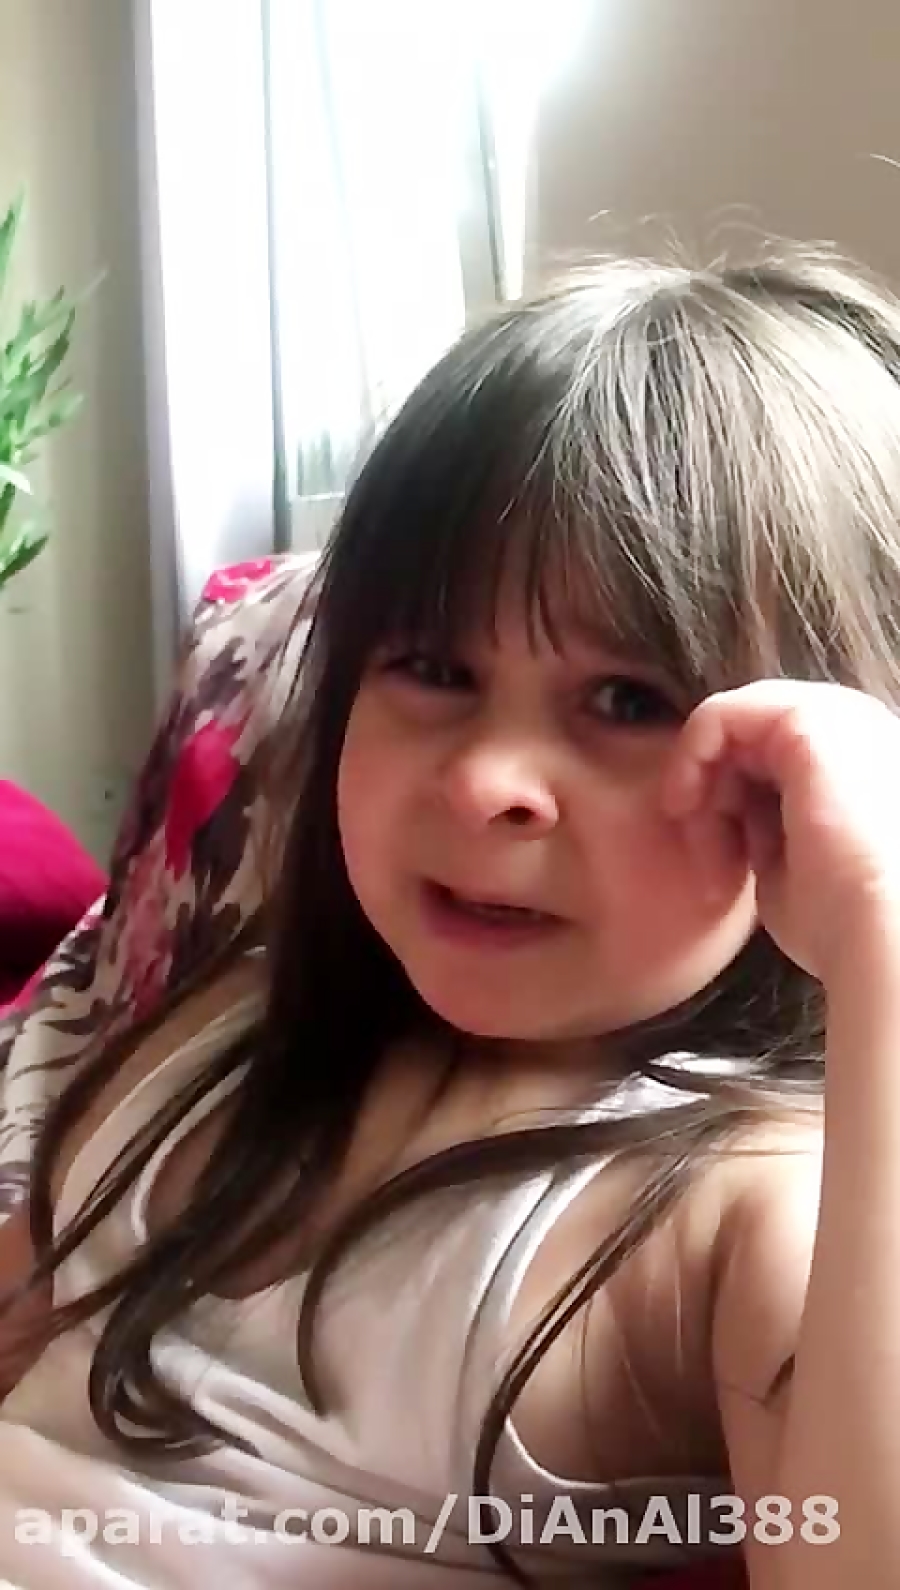 فیلم: یک ویدیو قشنگ از دختر کوچولوی ناز / ویدیو کلیپ | ویدیو اسک->